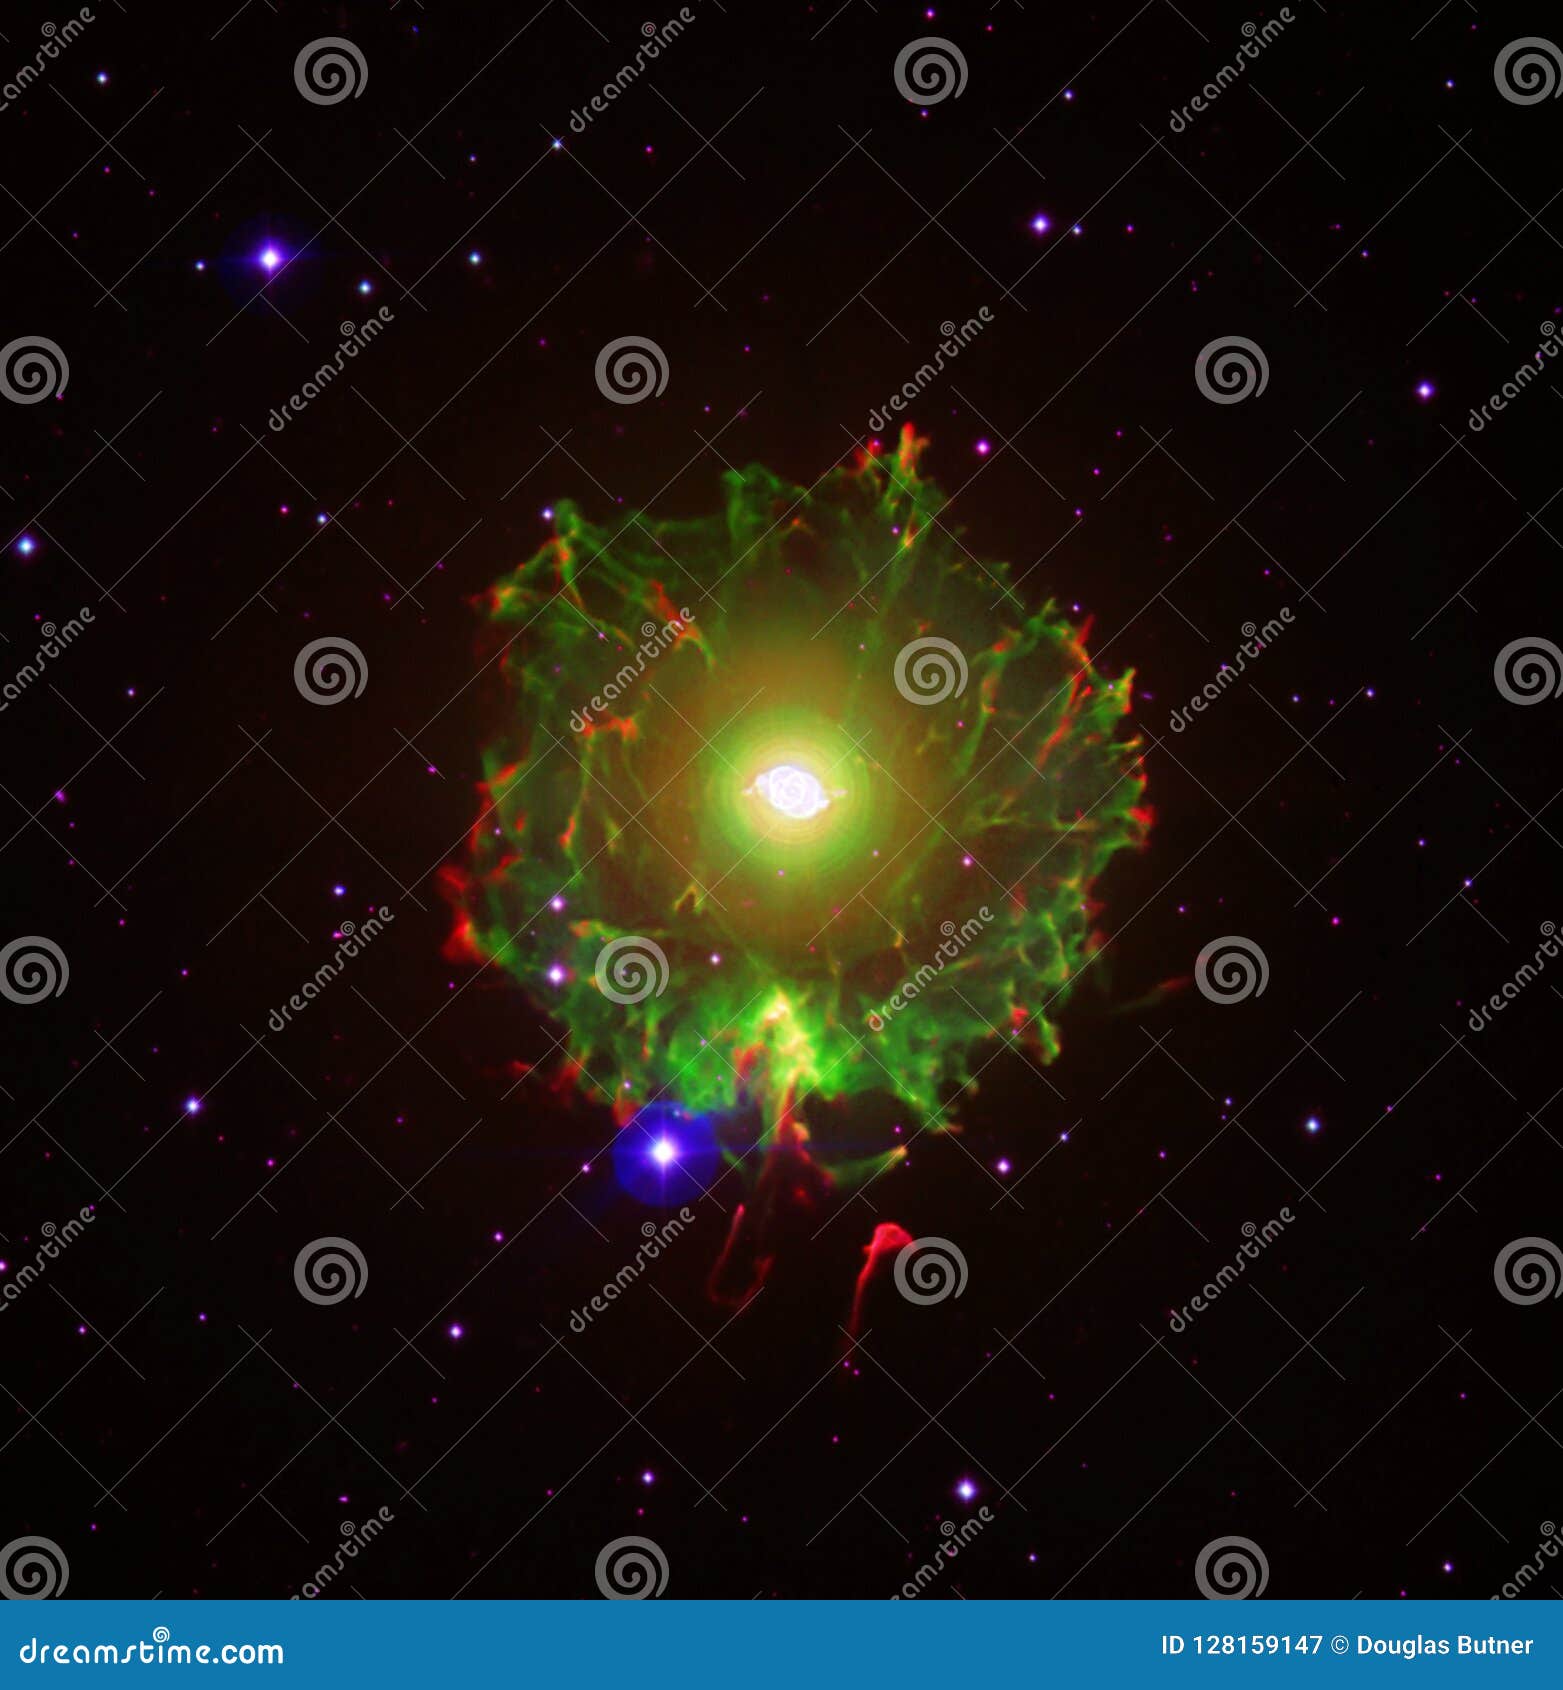 interesting nebula enhanced universe image s from nasa / eso | galaxy background wallpaper